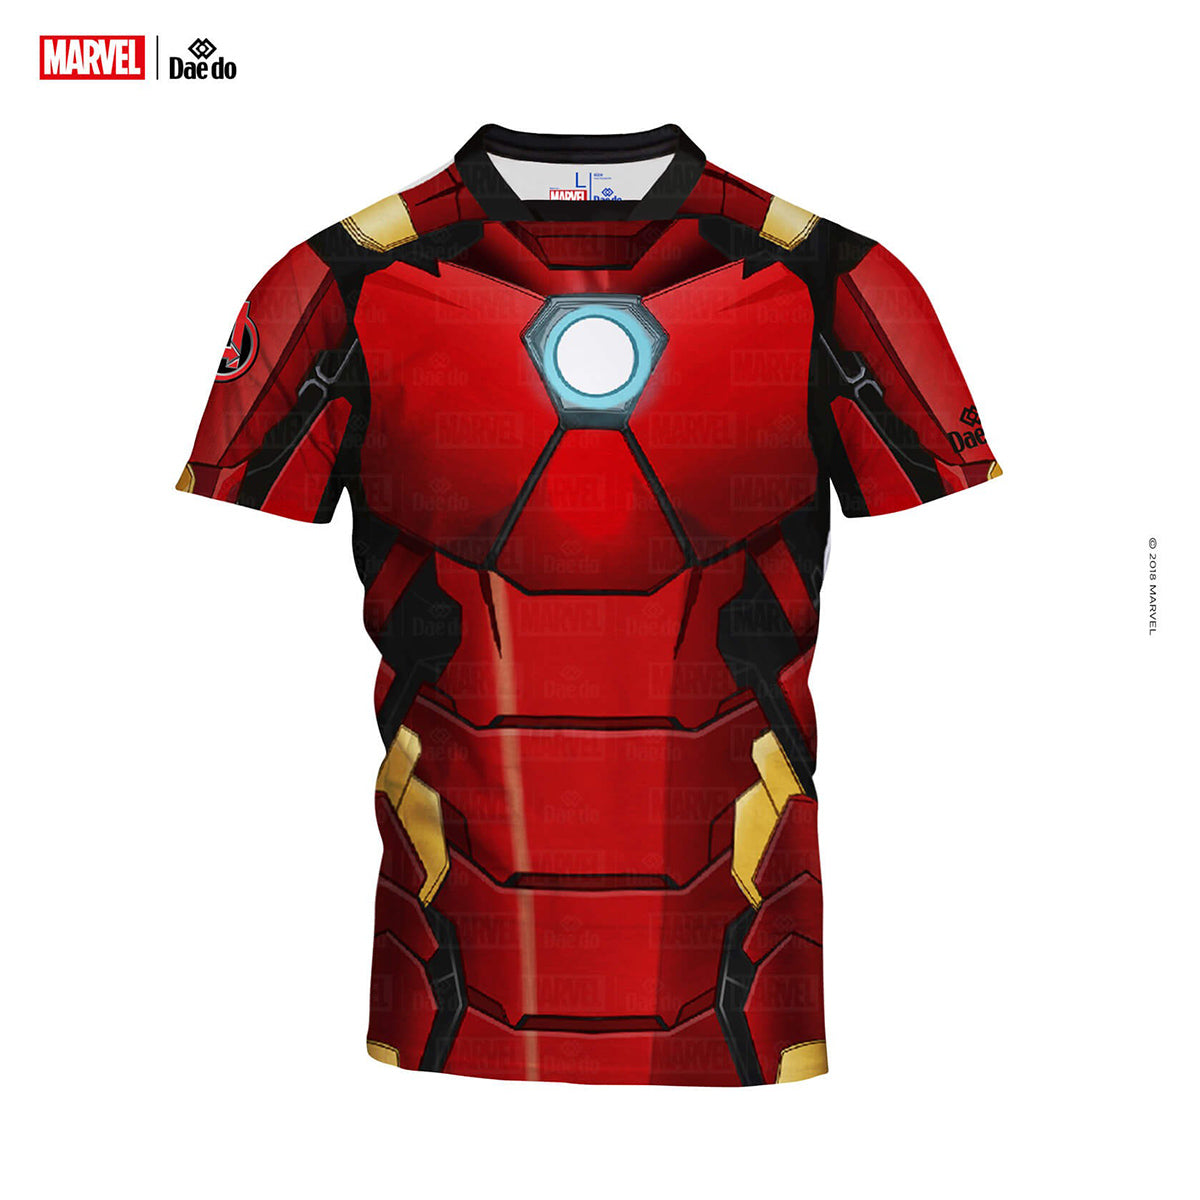 T-shirt imprimé Iron Man Daedo, MARV52101 